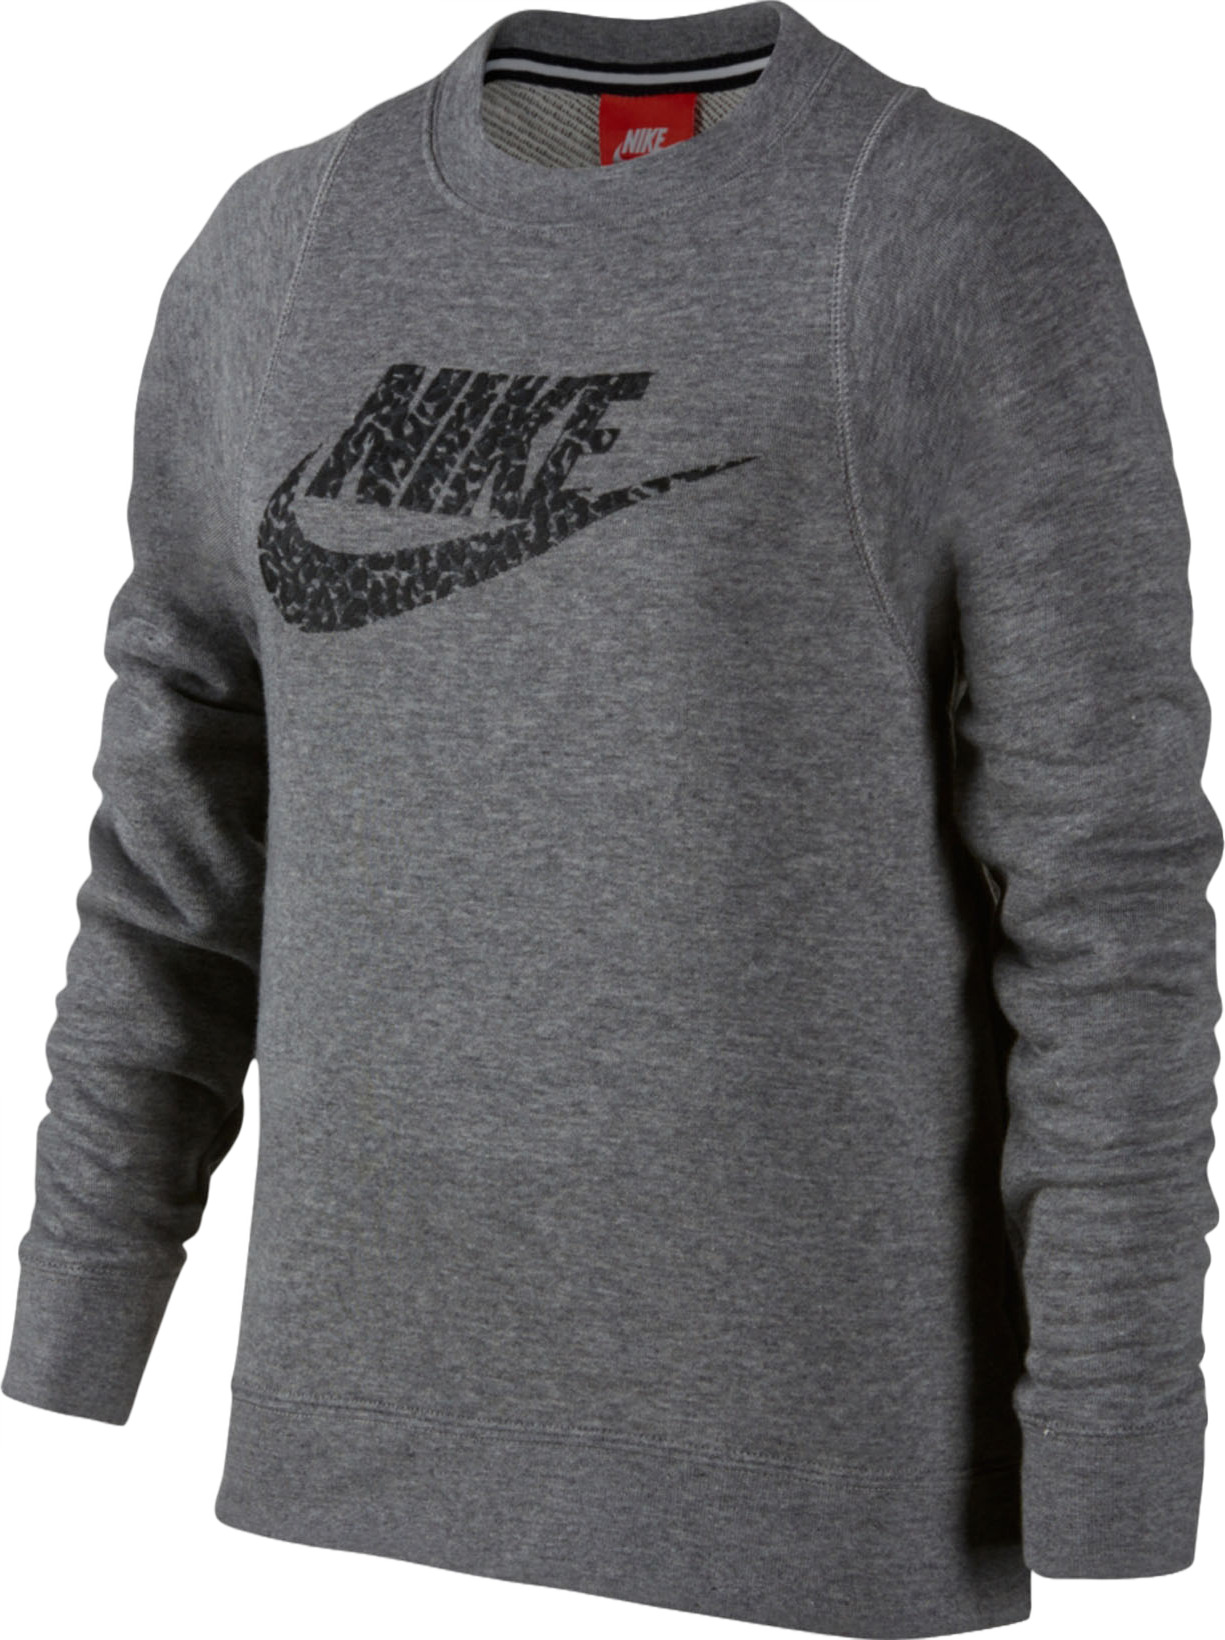 Детская толстовка Nike Sportswear Modern Crew LS 859992-091